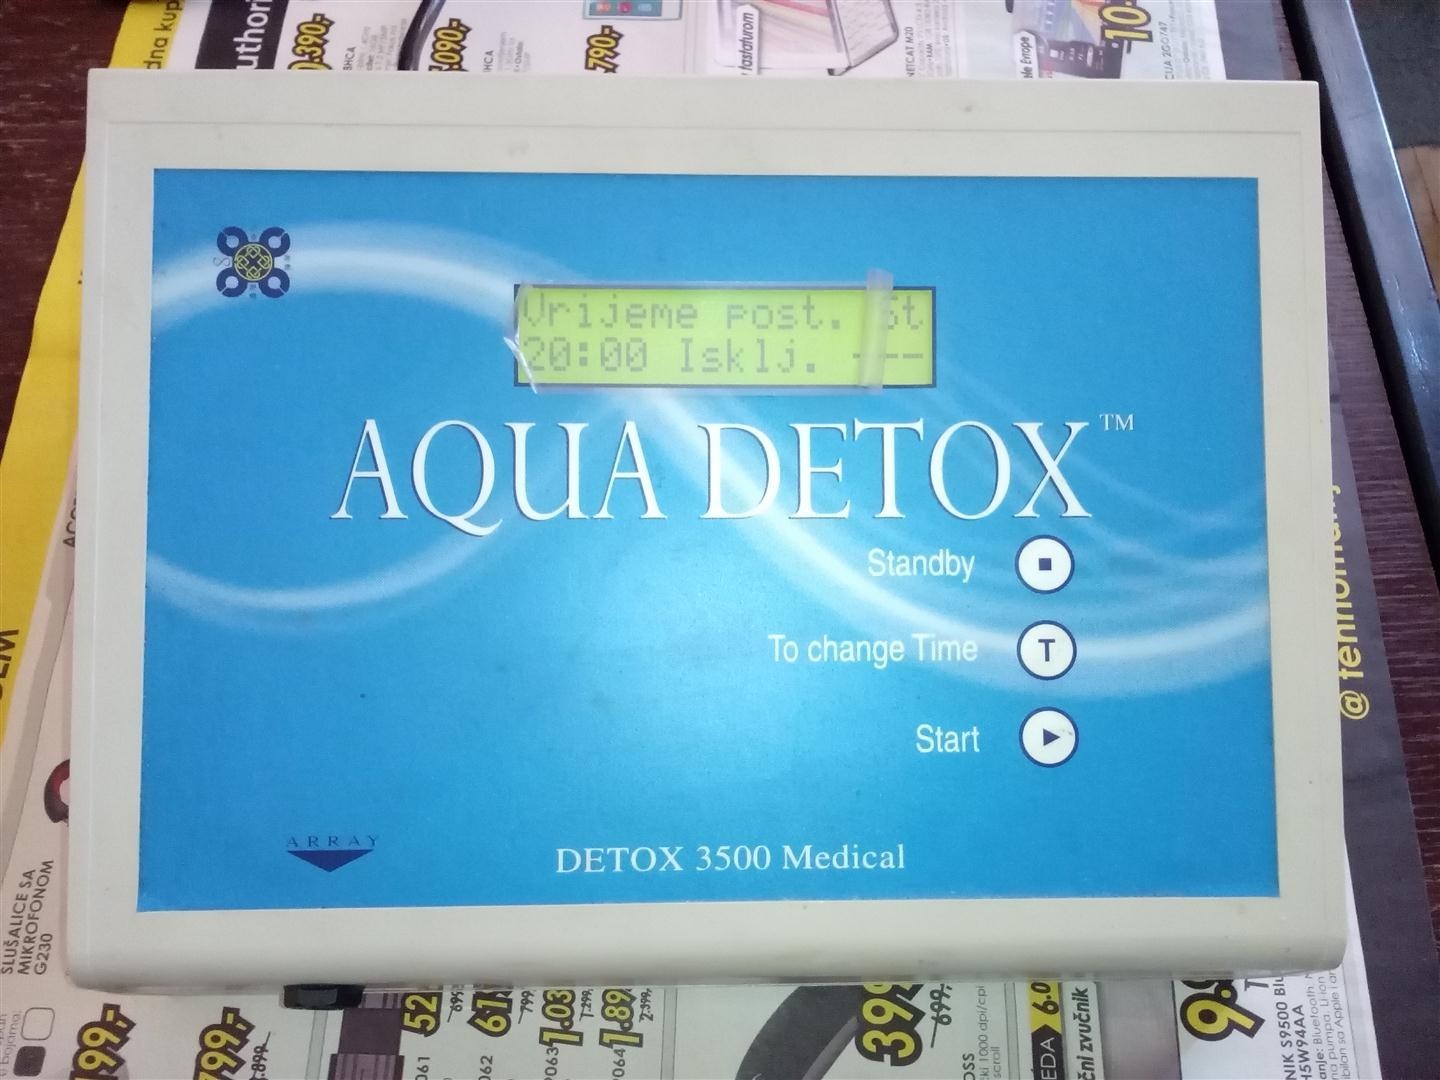 How to eliminate hpv virus, Aqua detox kadica prodaja